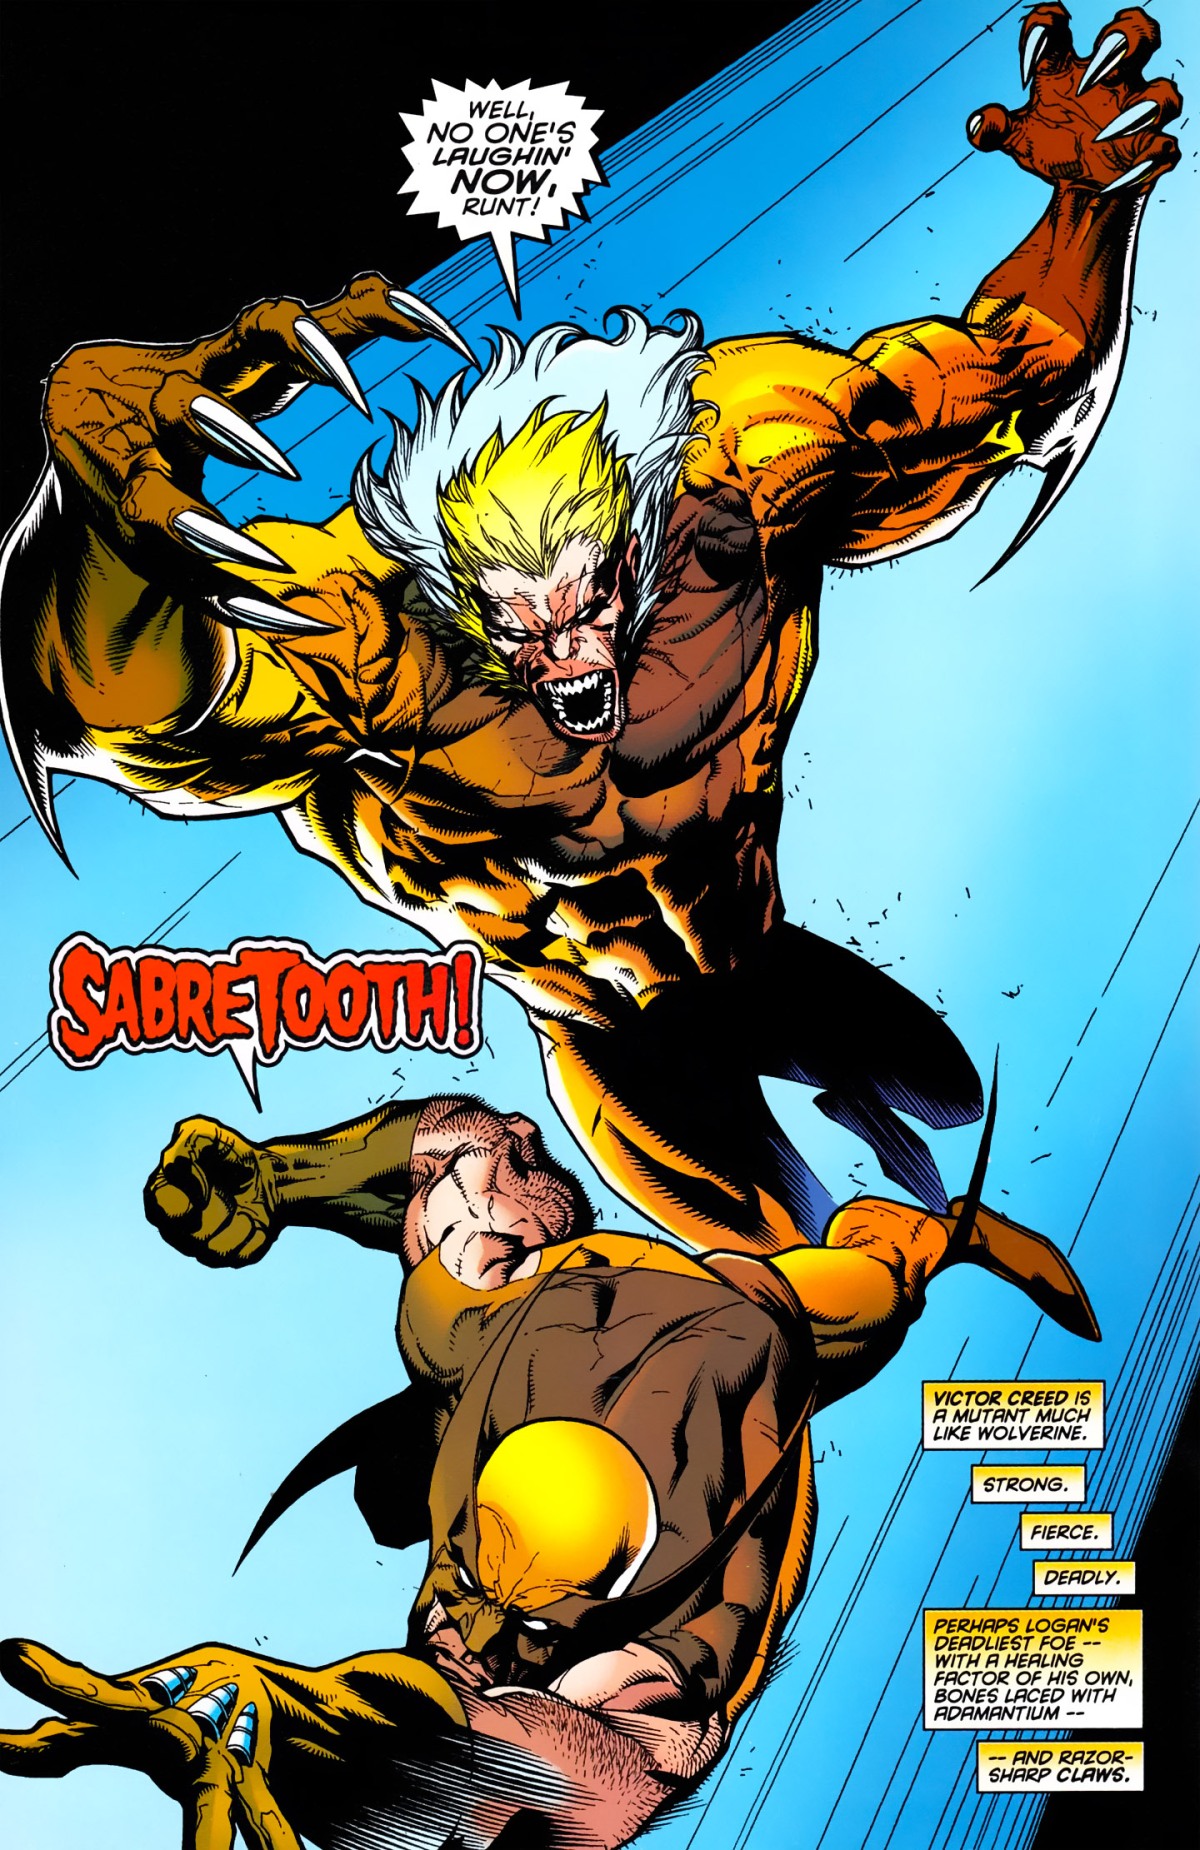 Wolverine vs. Sabertooth (Wolverine gets his adamantium back)